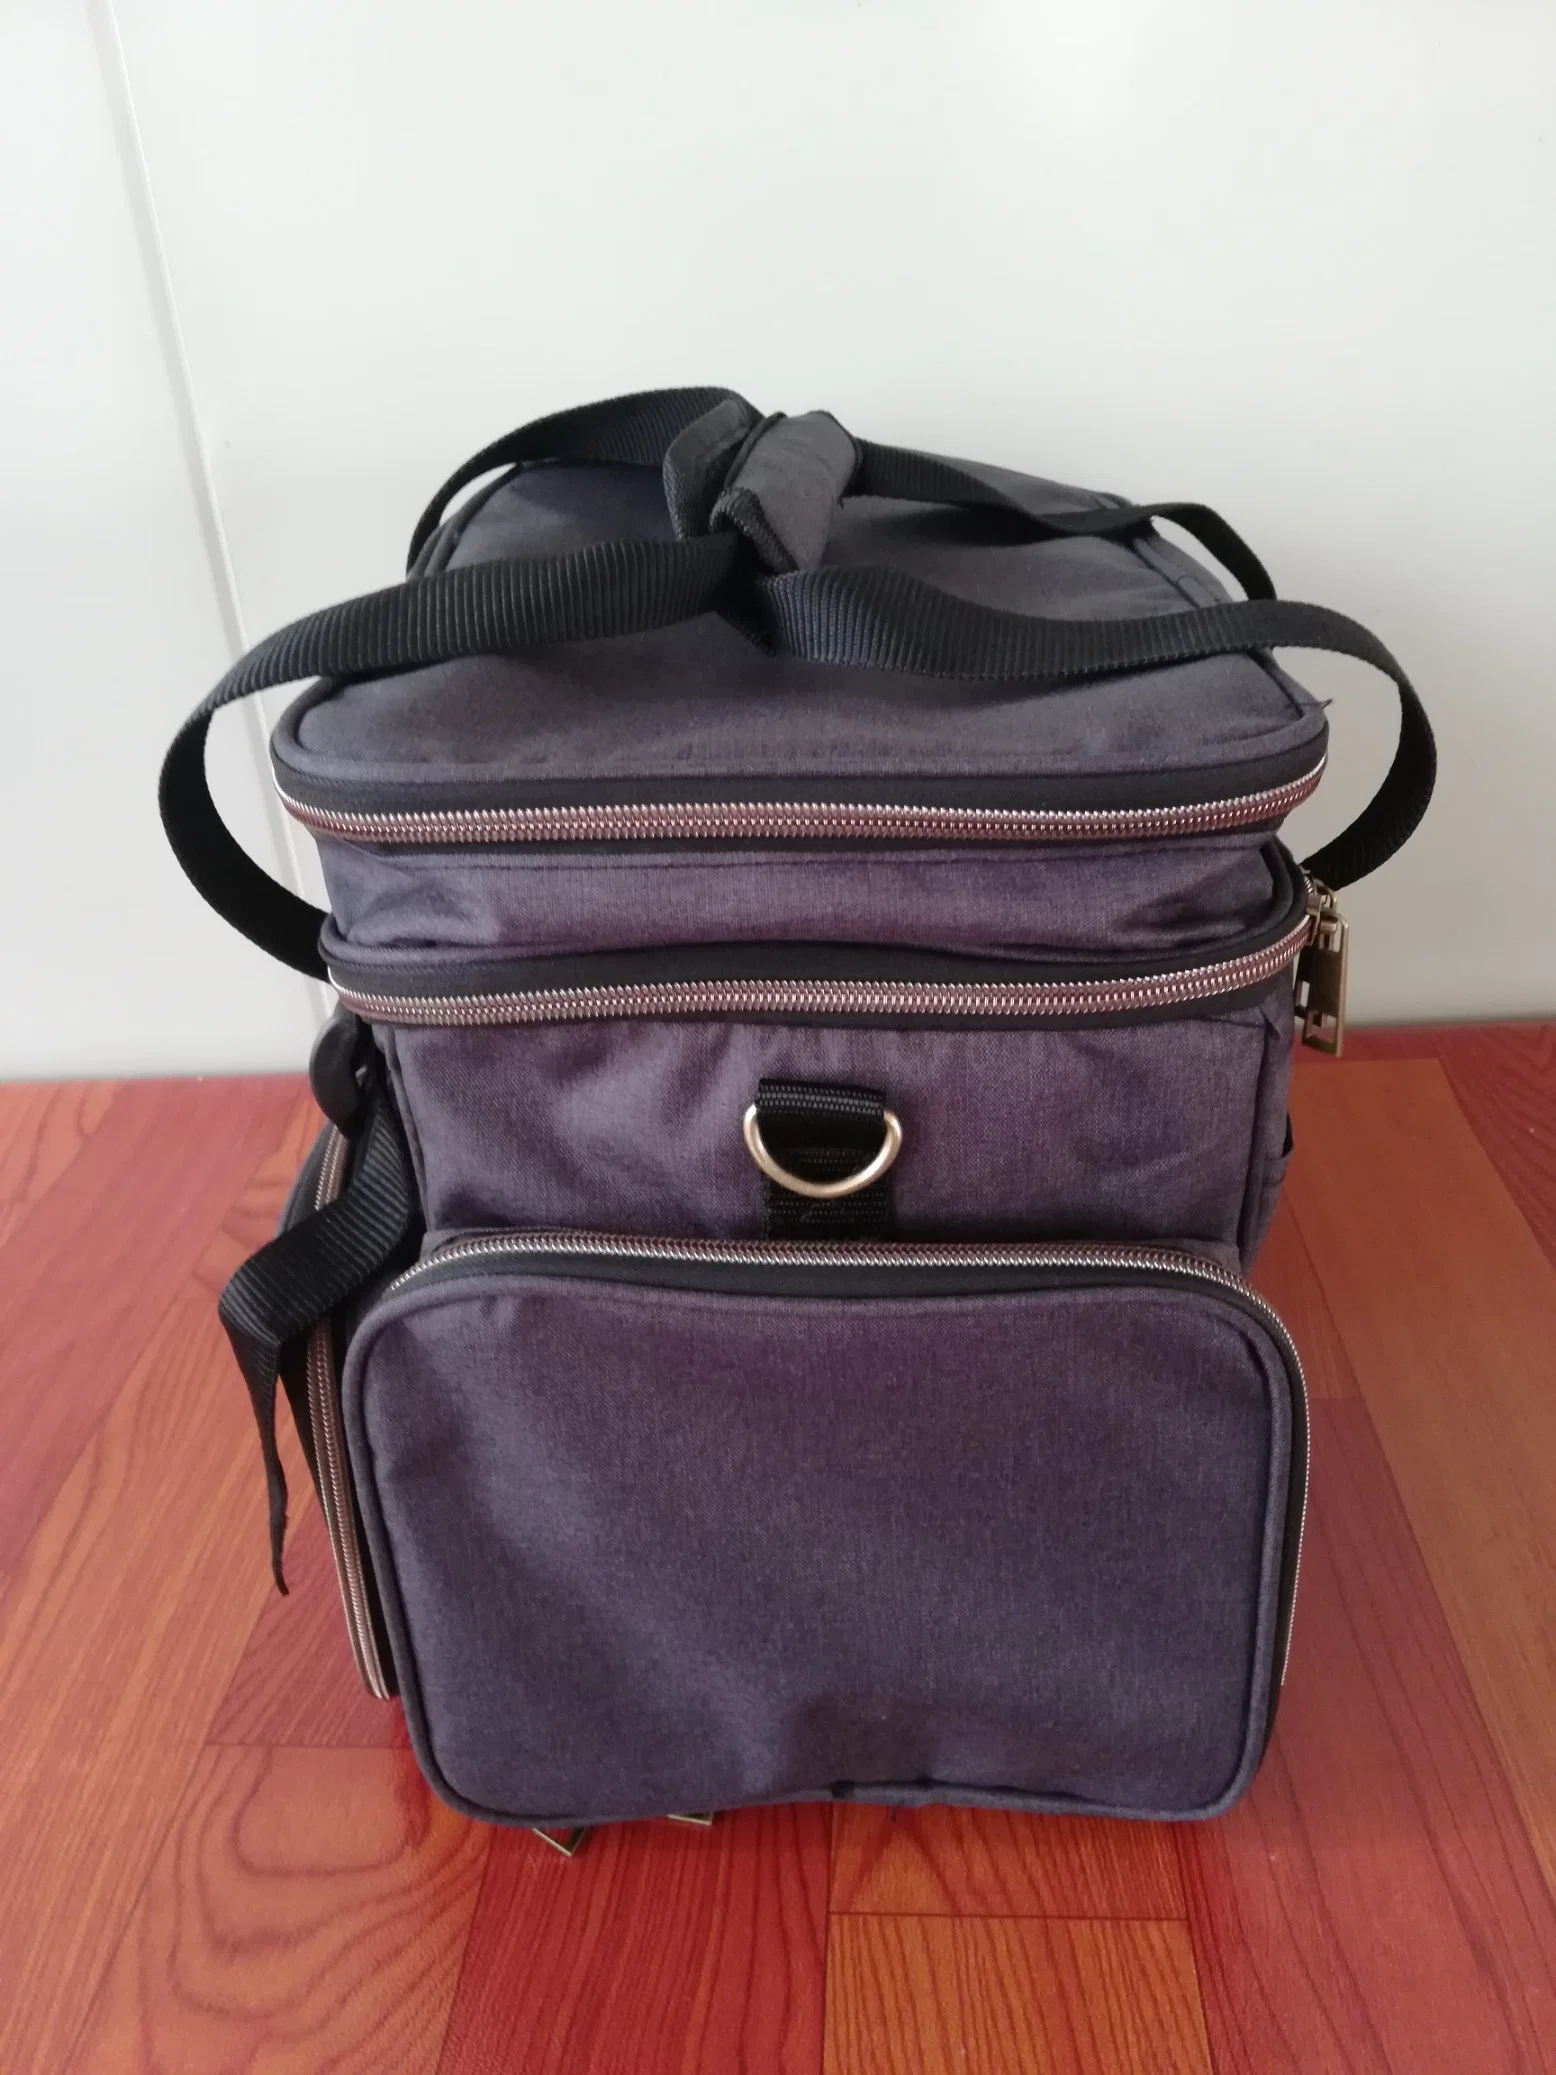 Game Bag Controller Storage Handbag Travel Storage for Game Accessories with EVA Case